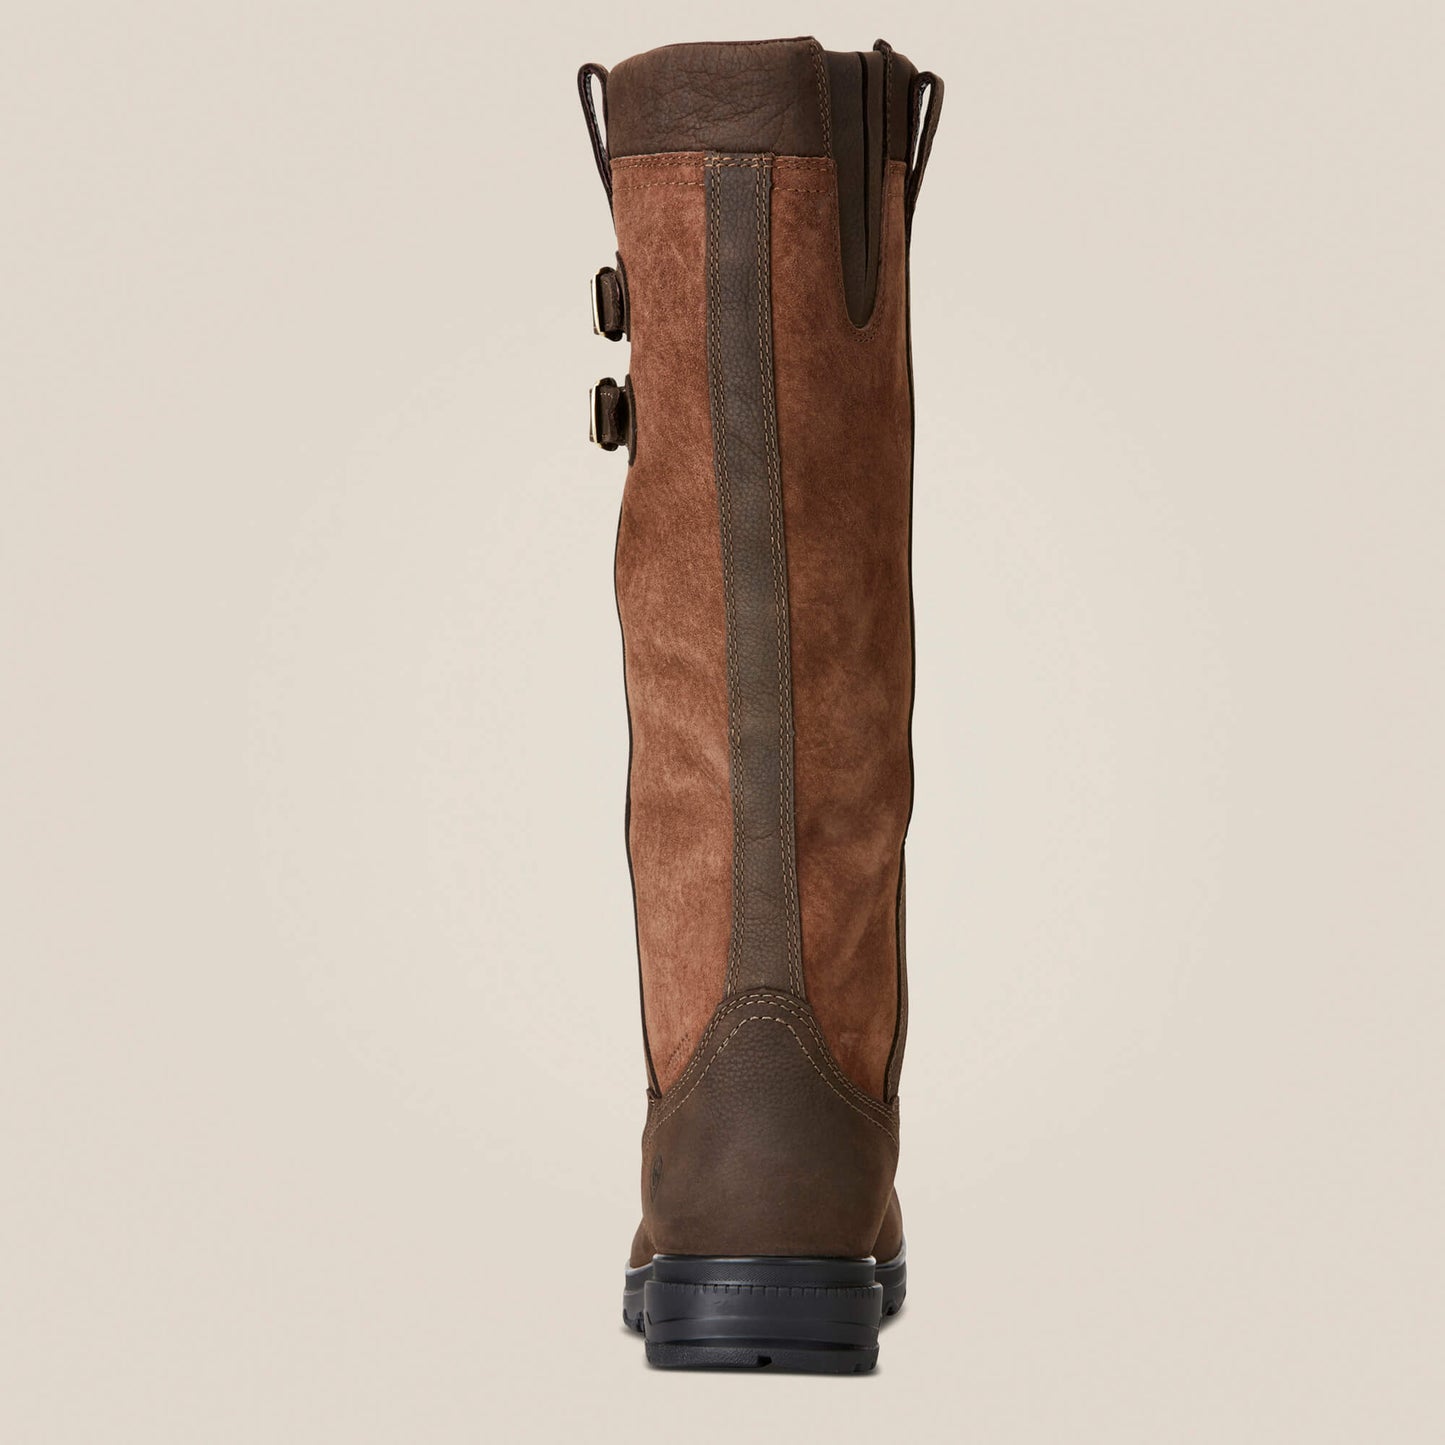 Ariat Eskdale Waterproof Country Boots